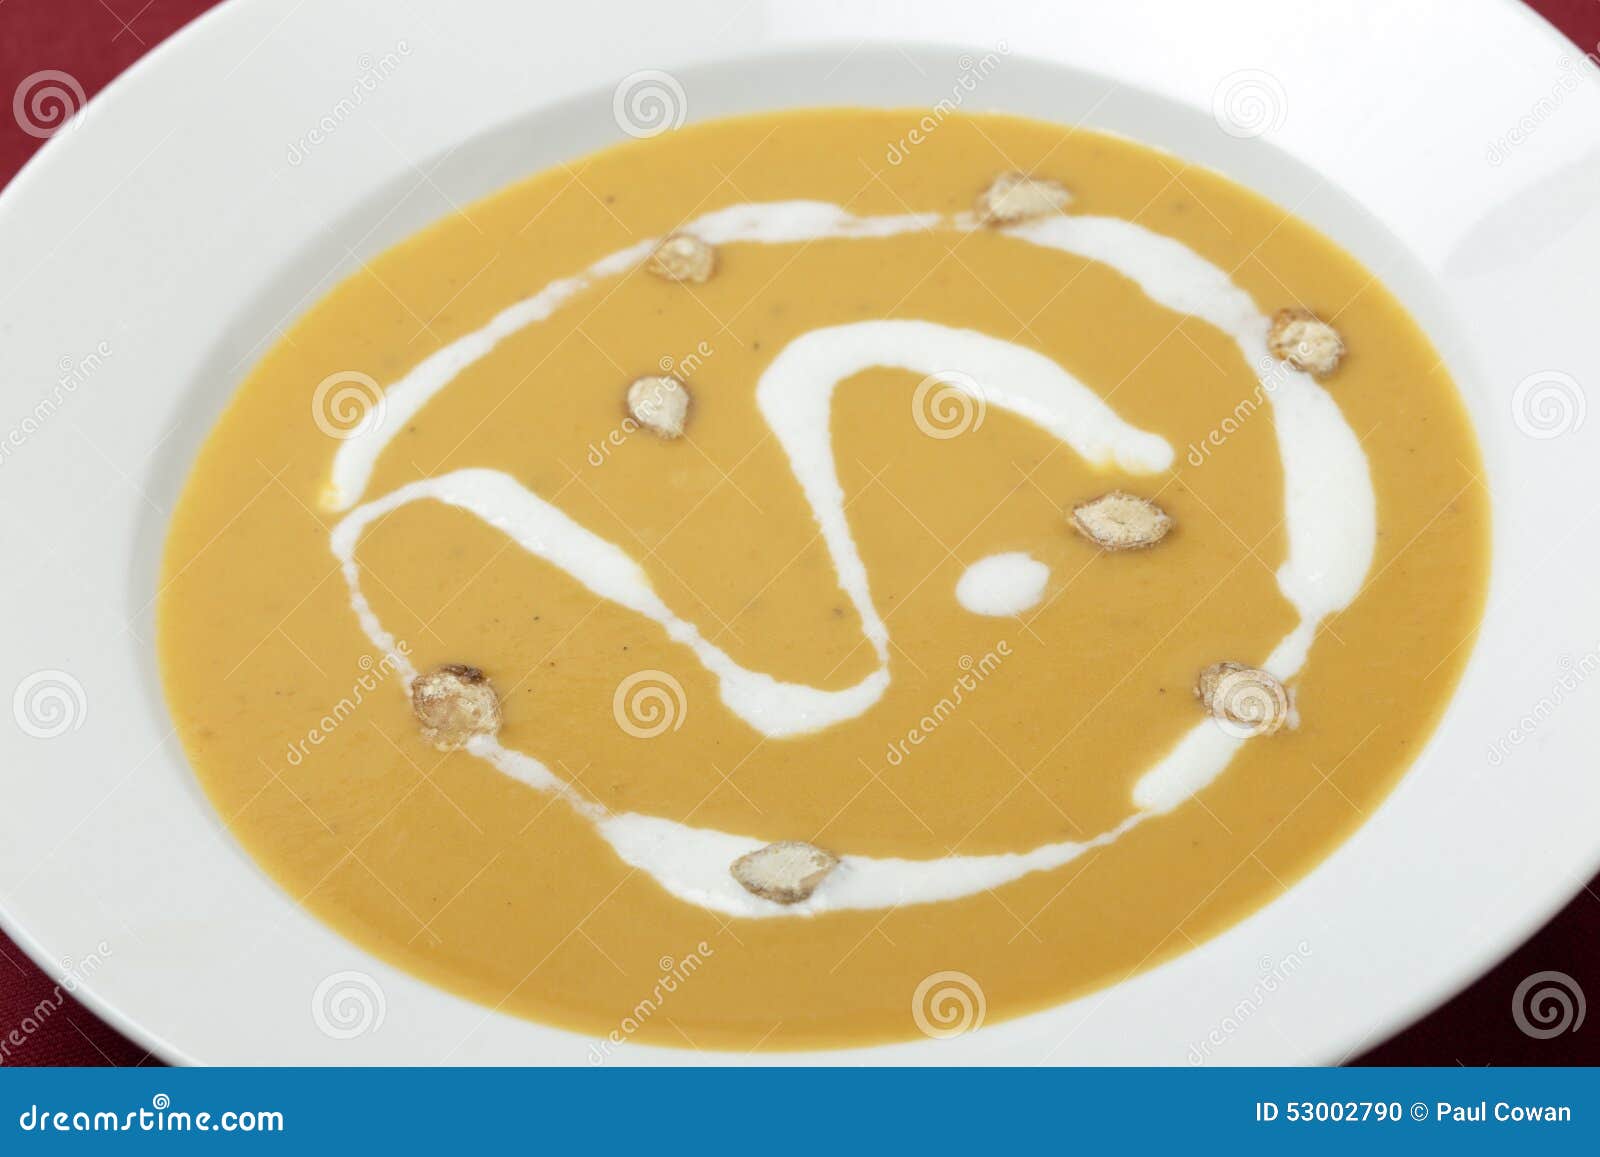 french squash soup closeup